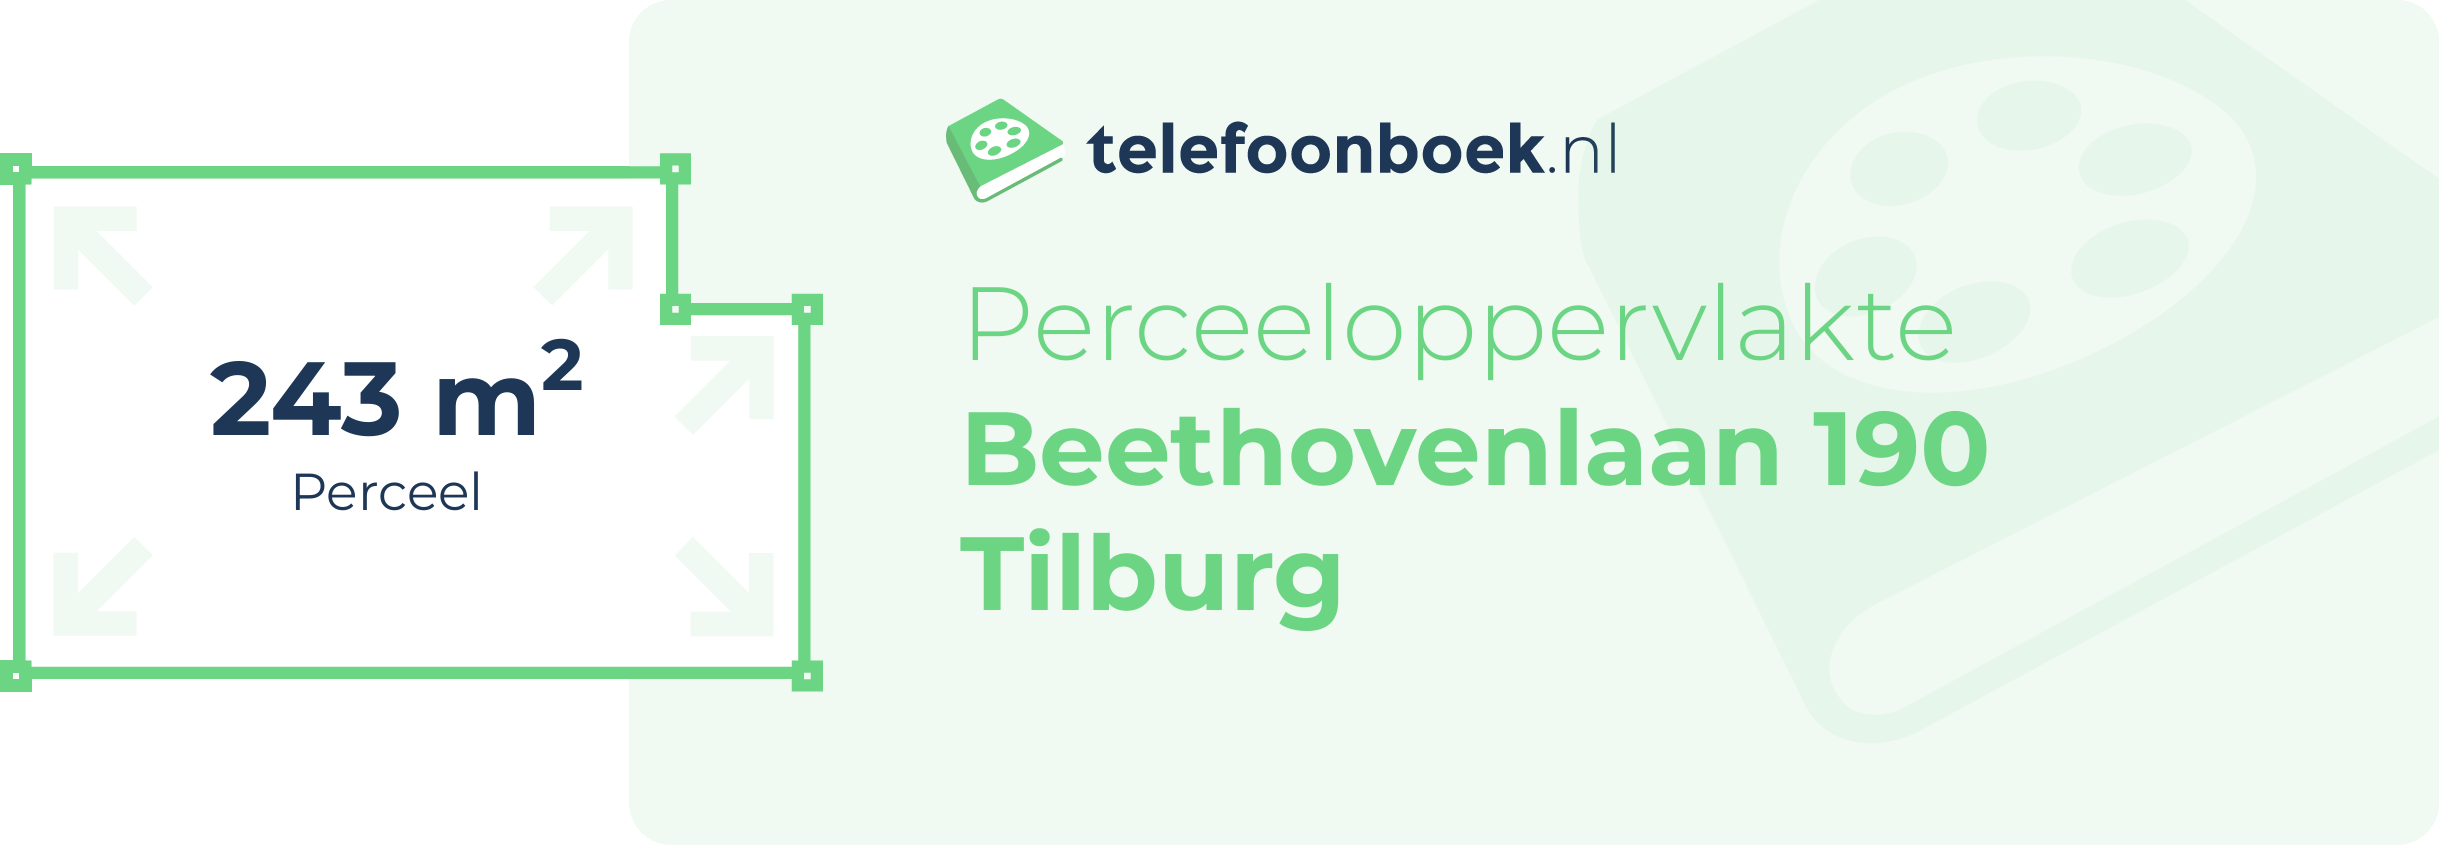 Perceeloppervlakte Beethovenlaan 190 Tilburg